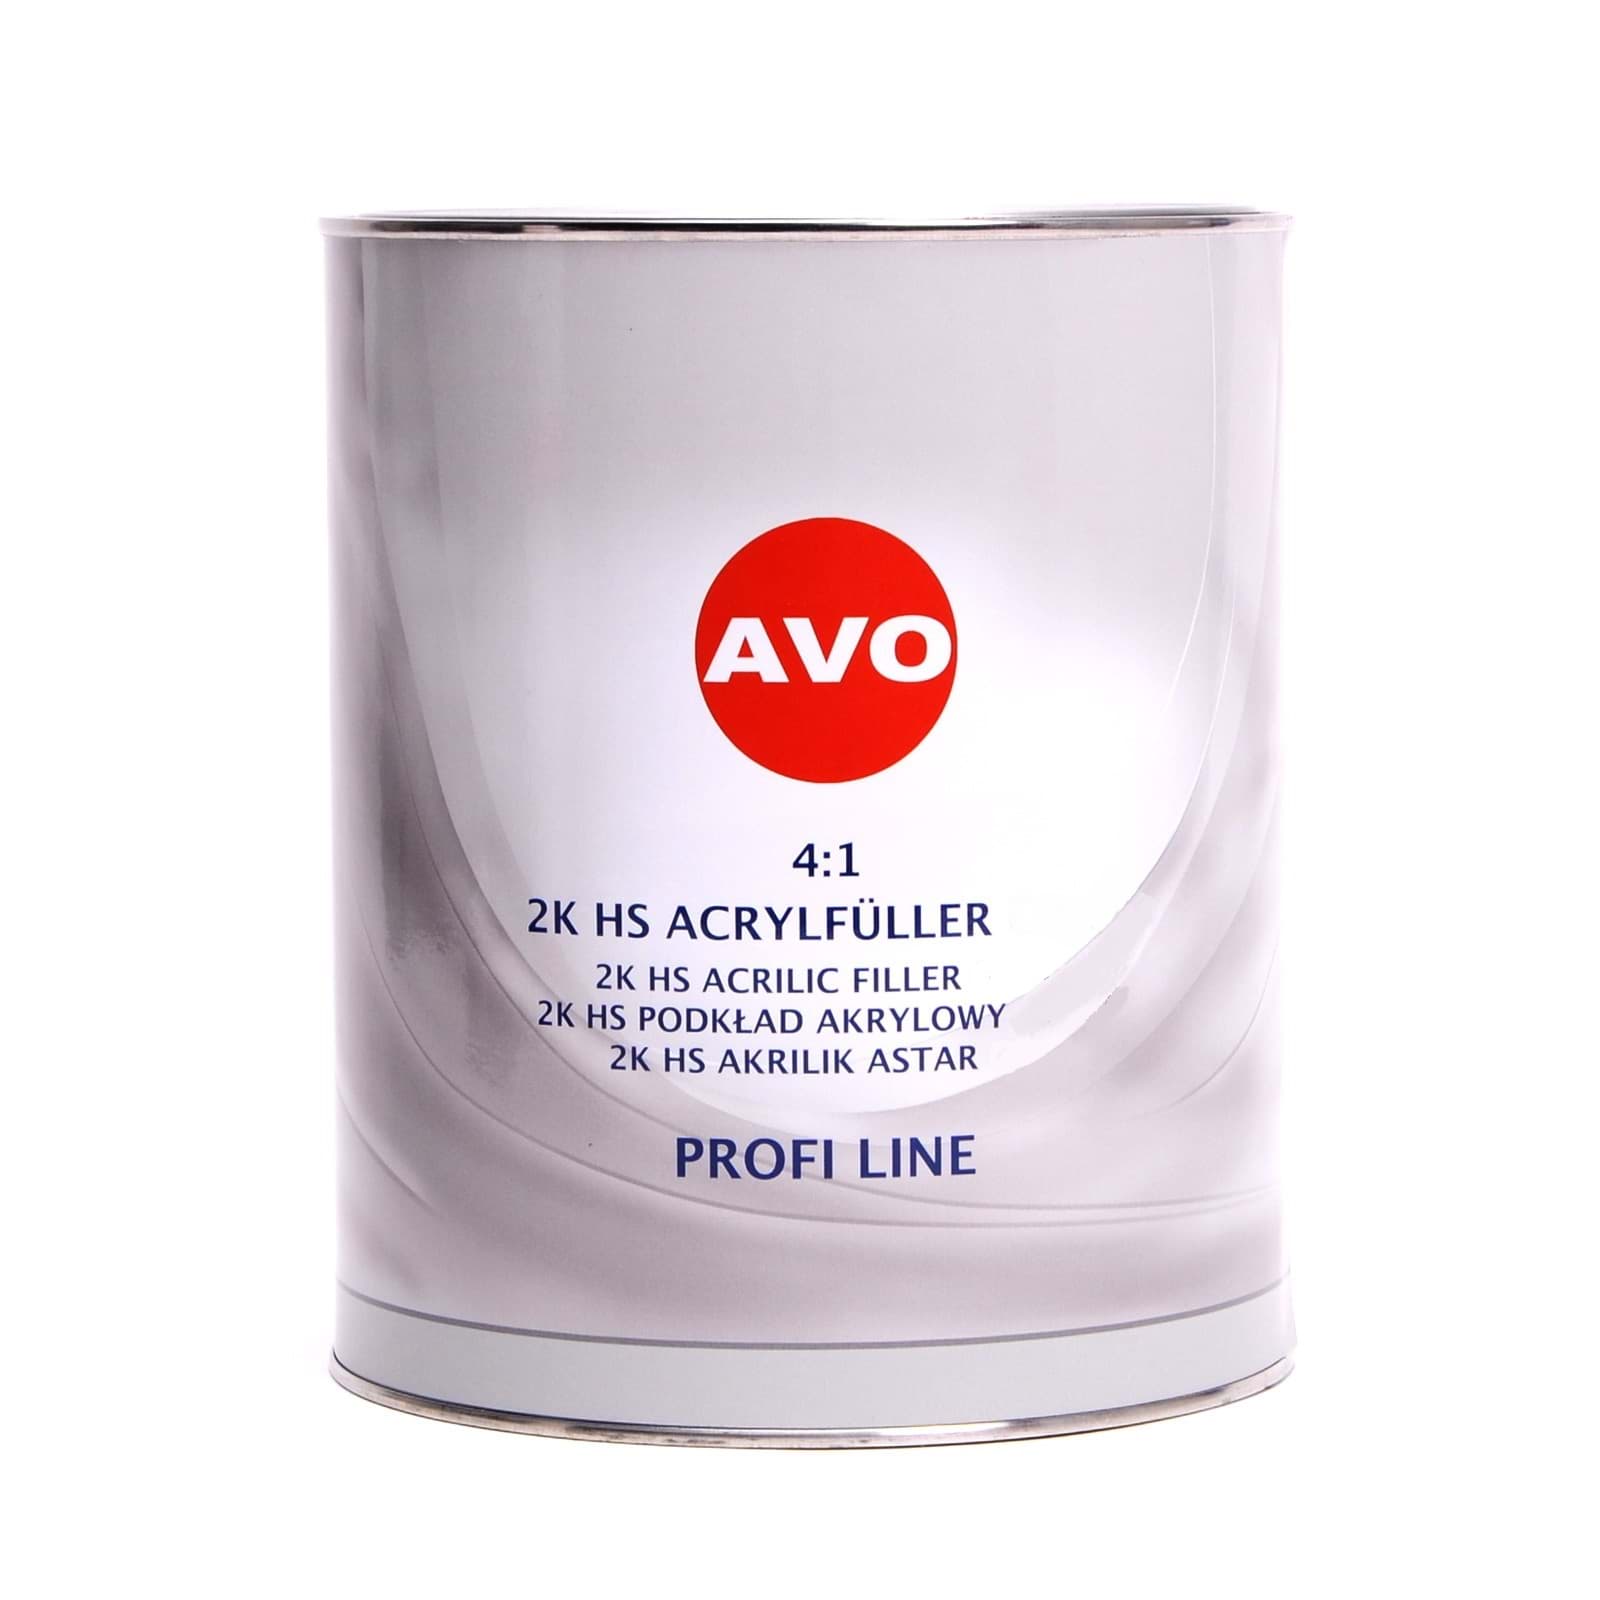 AVO 2K HS 4:1 Grundier Füller  Acrylfiller weiss 4 Liter resmi